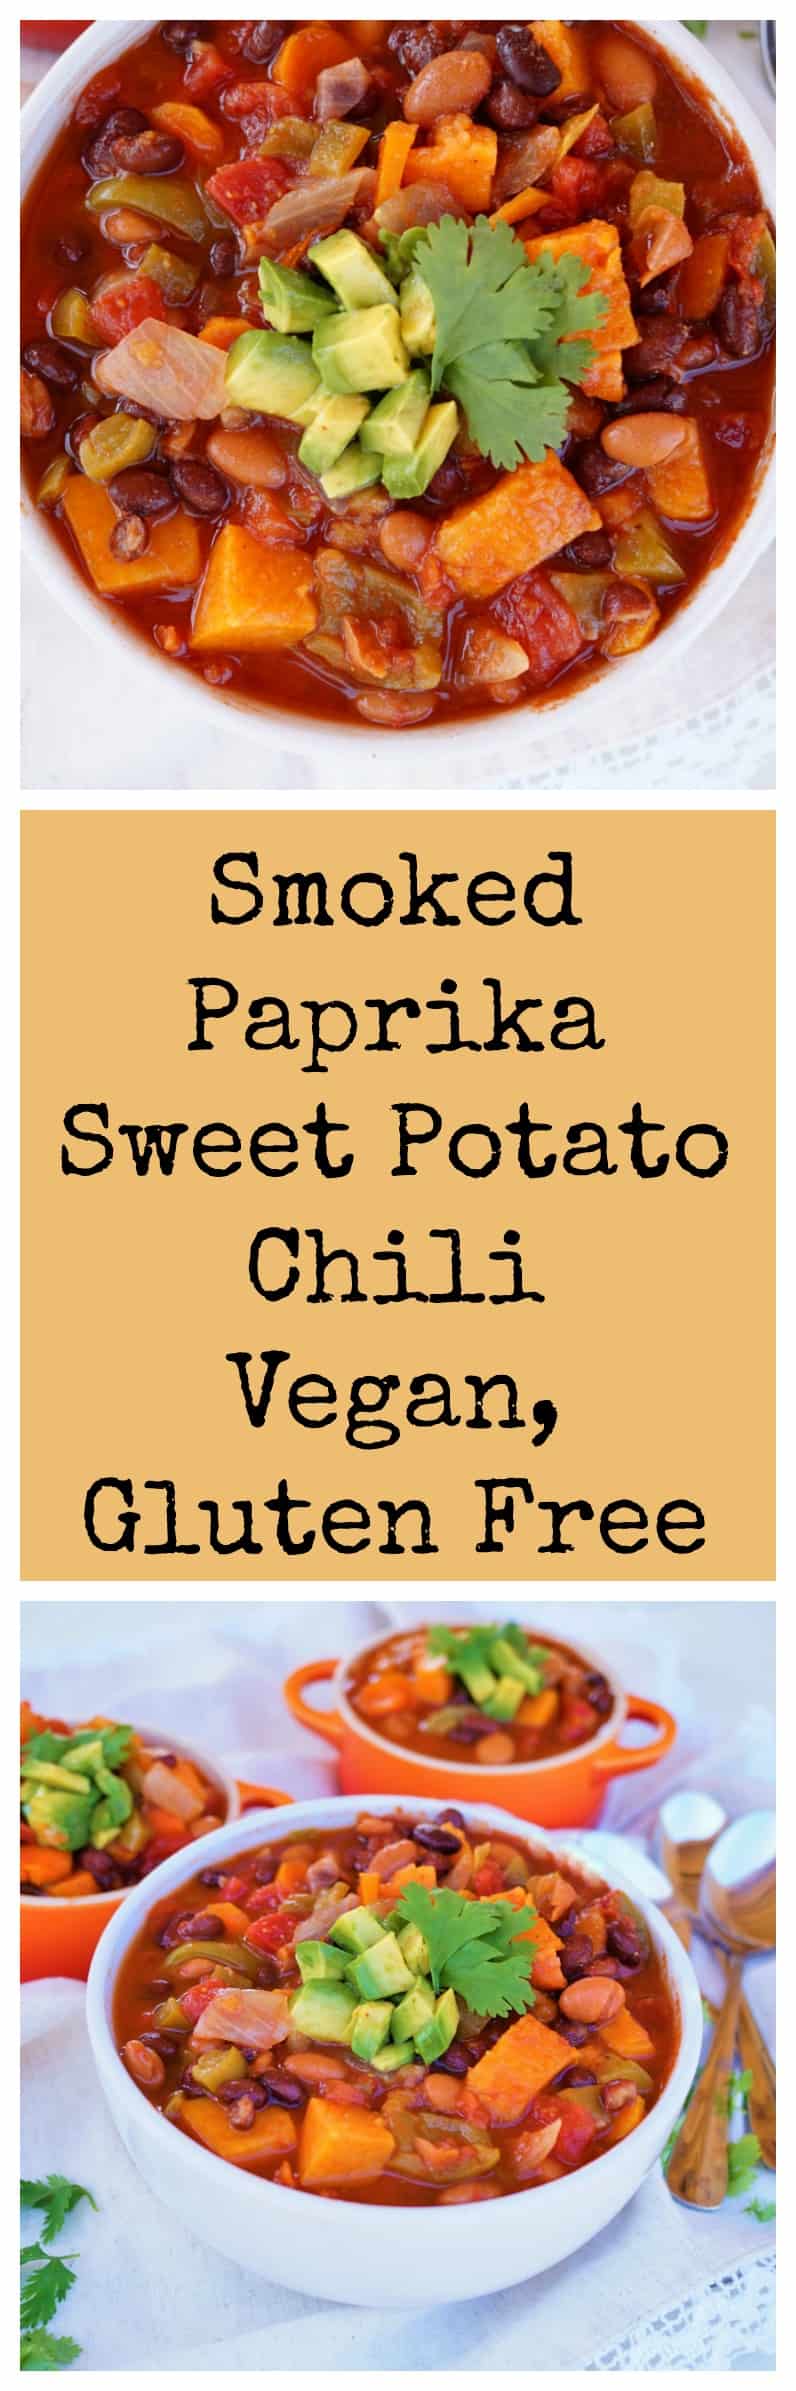 smoked-paprika-sweet-potato-chili-vegan-gluten-free-shawsimpleswaps